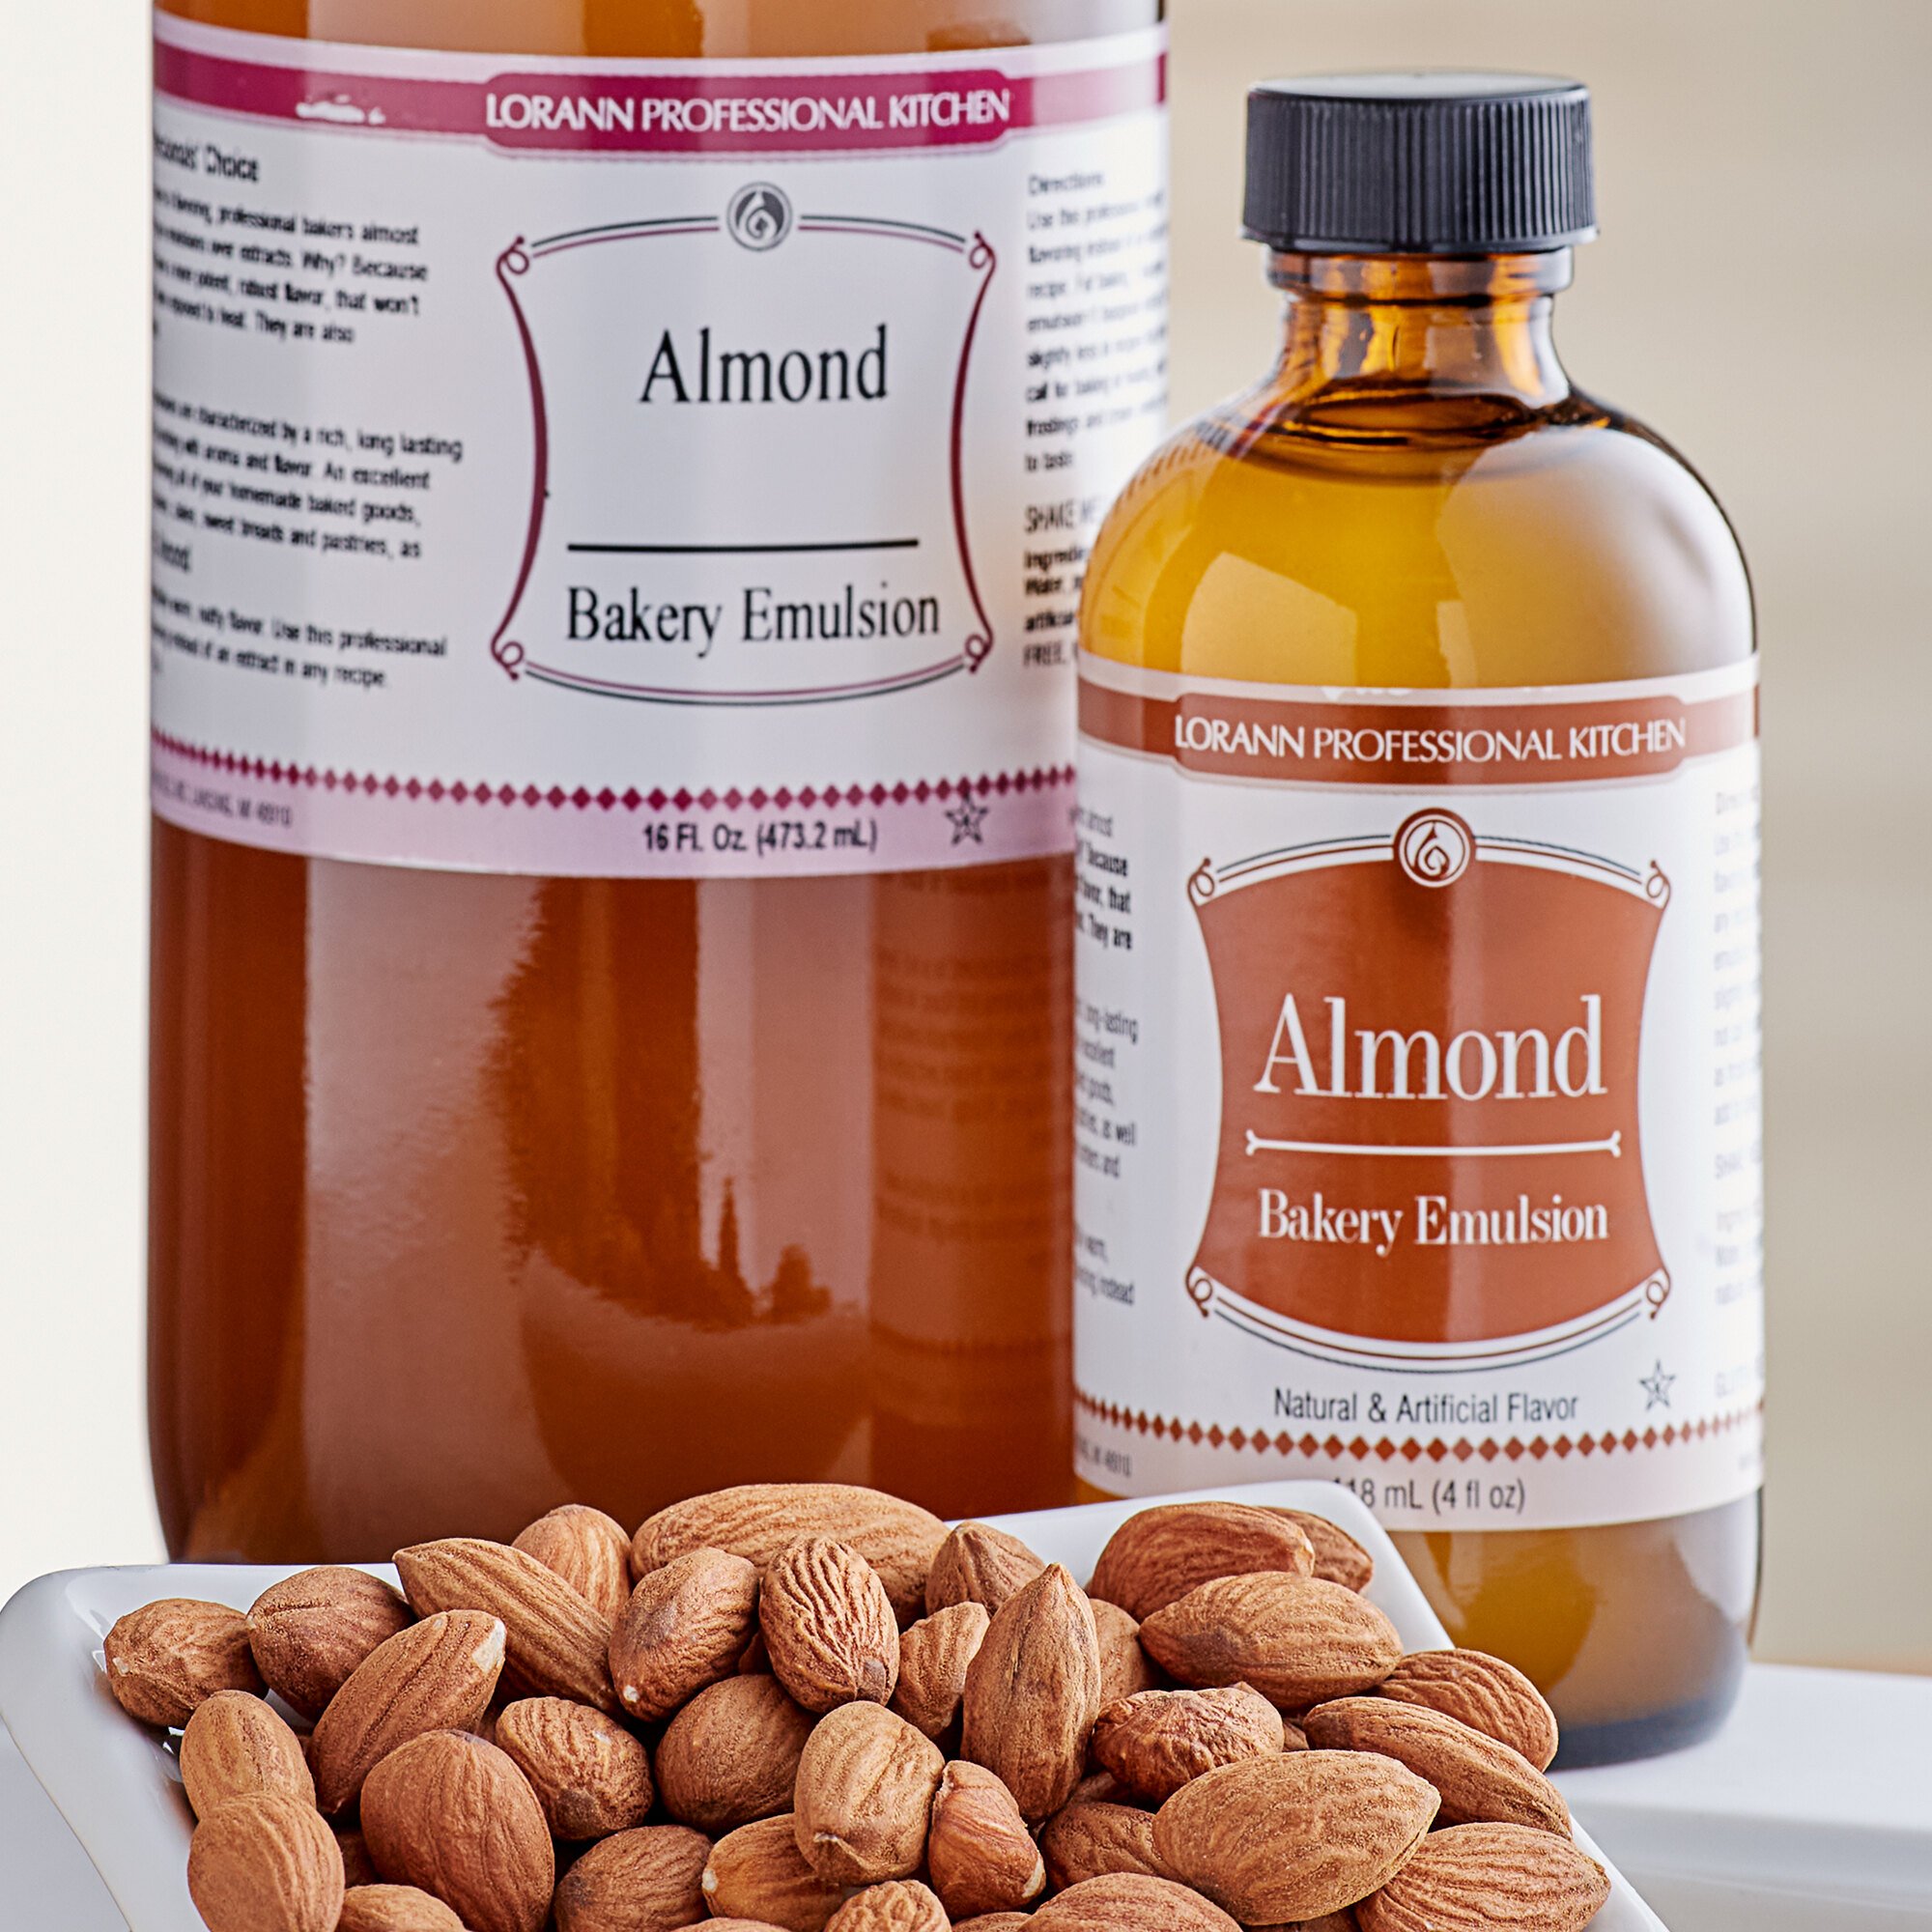 almond bakery emulsion ingredient list lorann